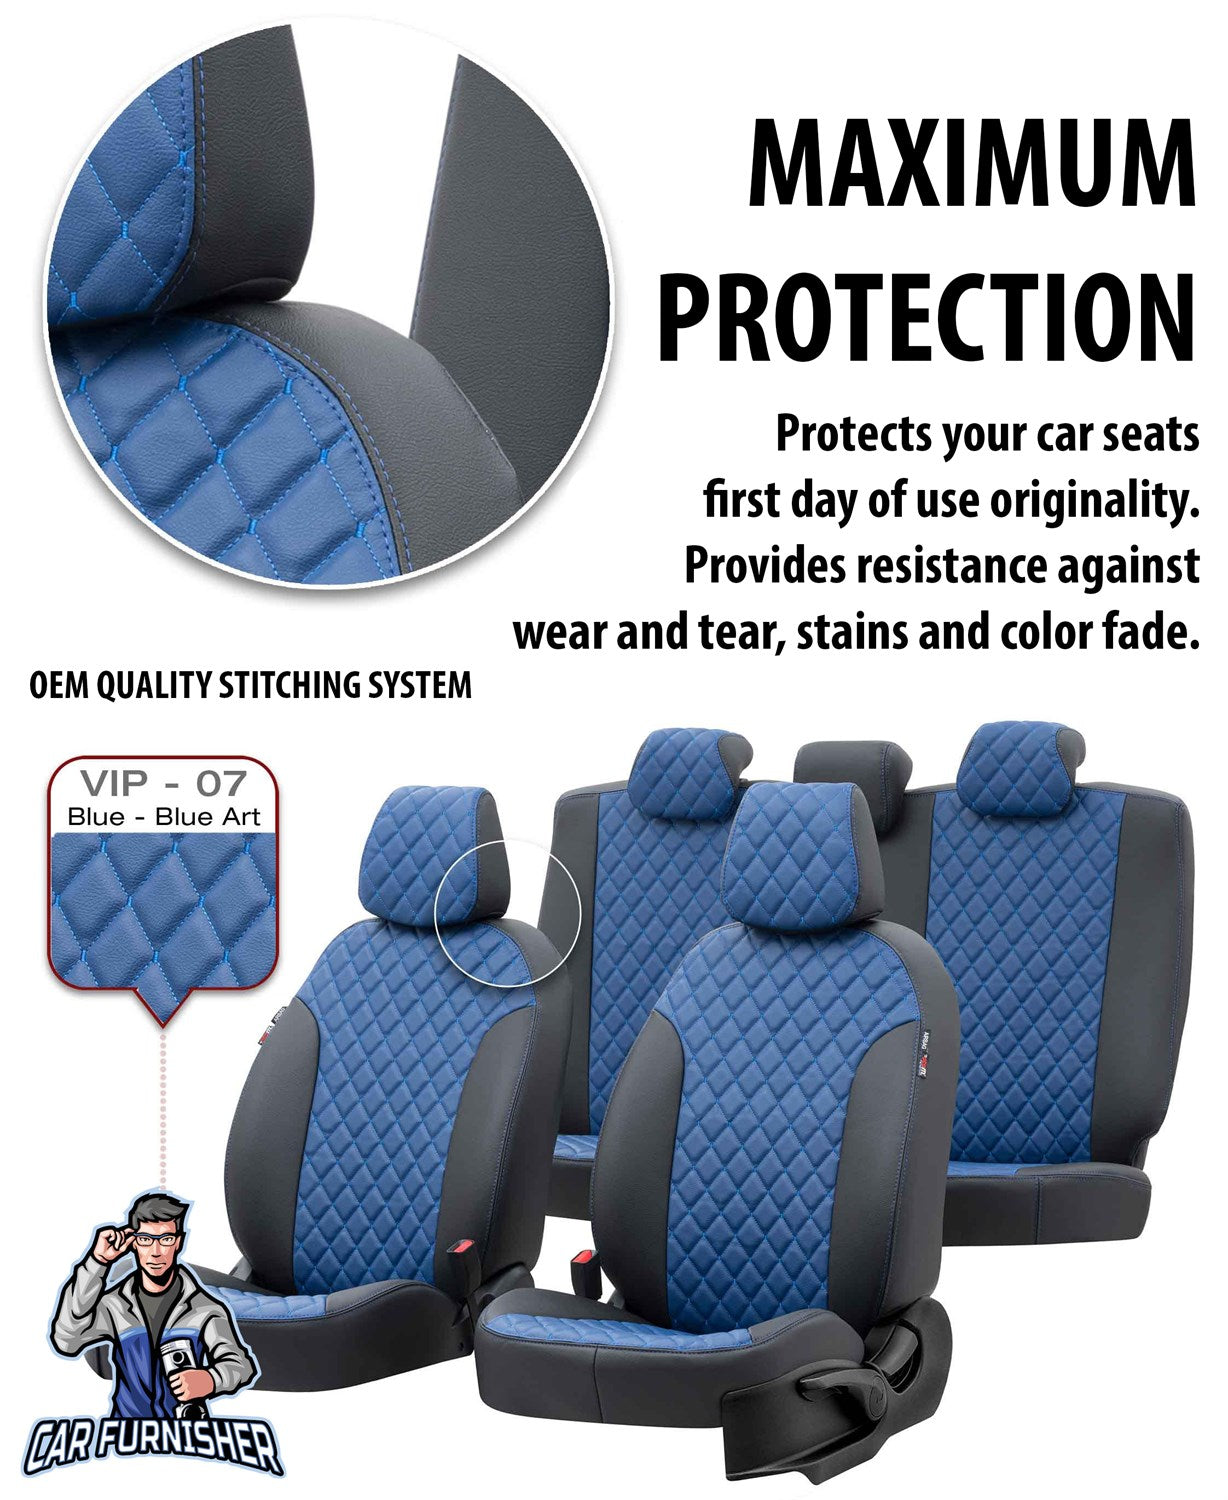 Kia Sportage Seat Covers Madrid Leather Design Beige Leather